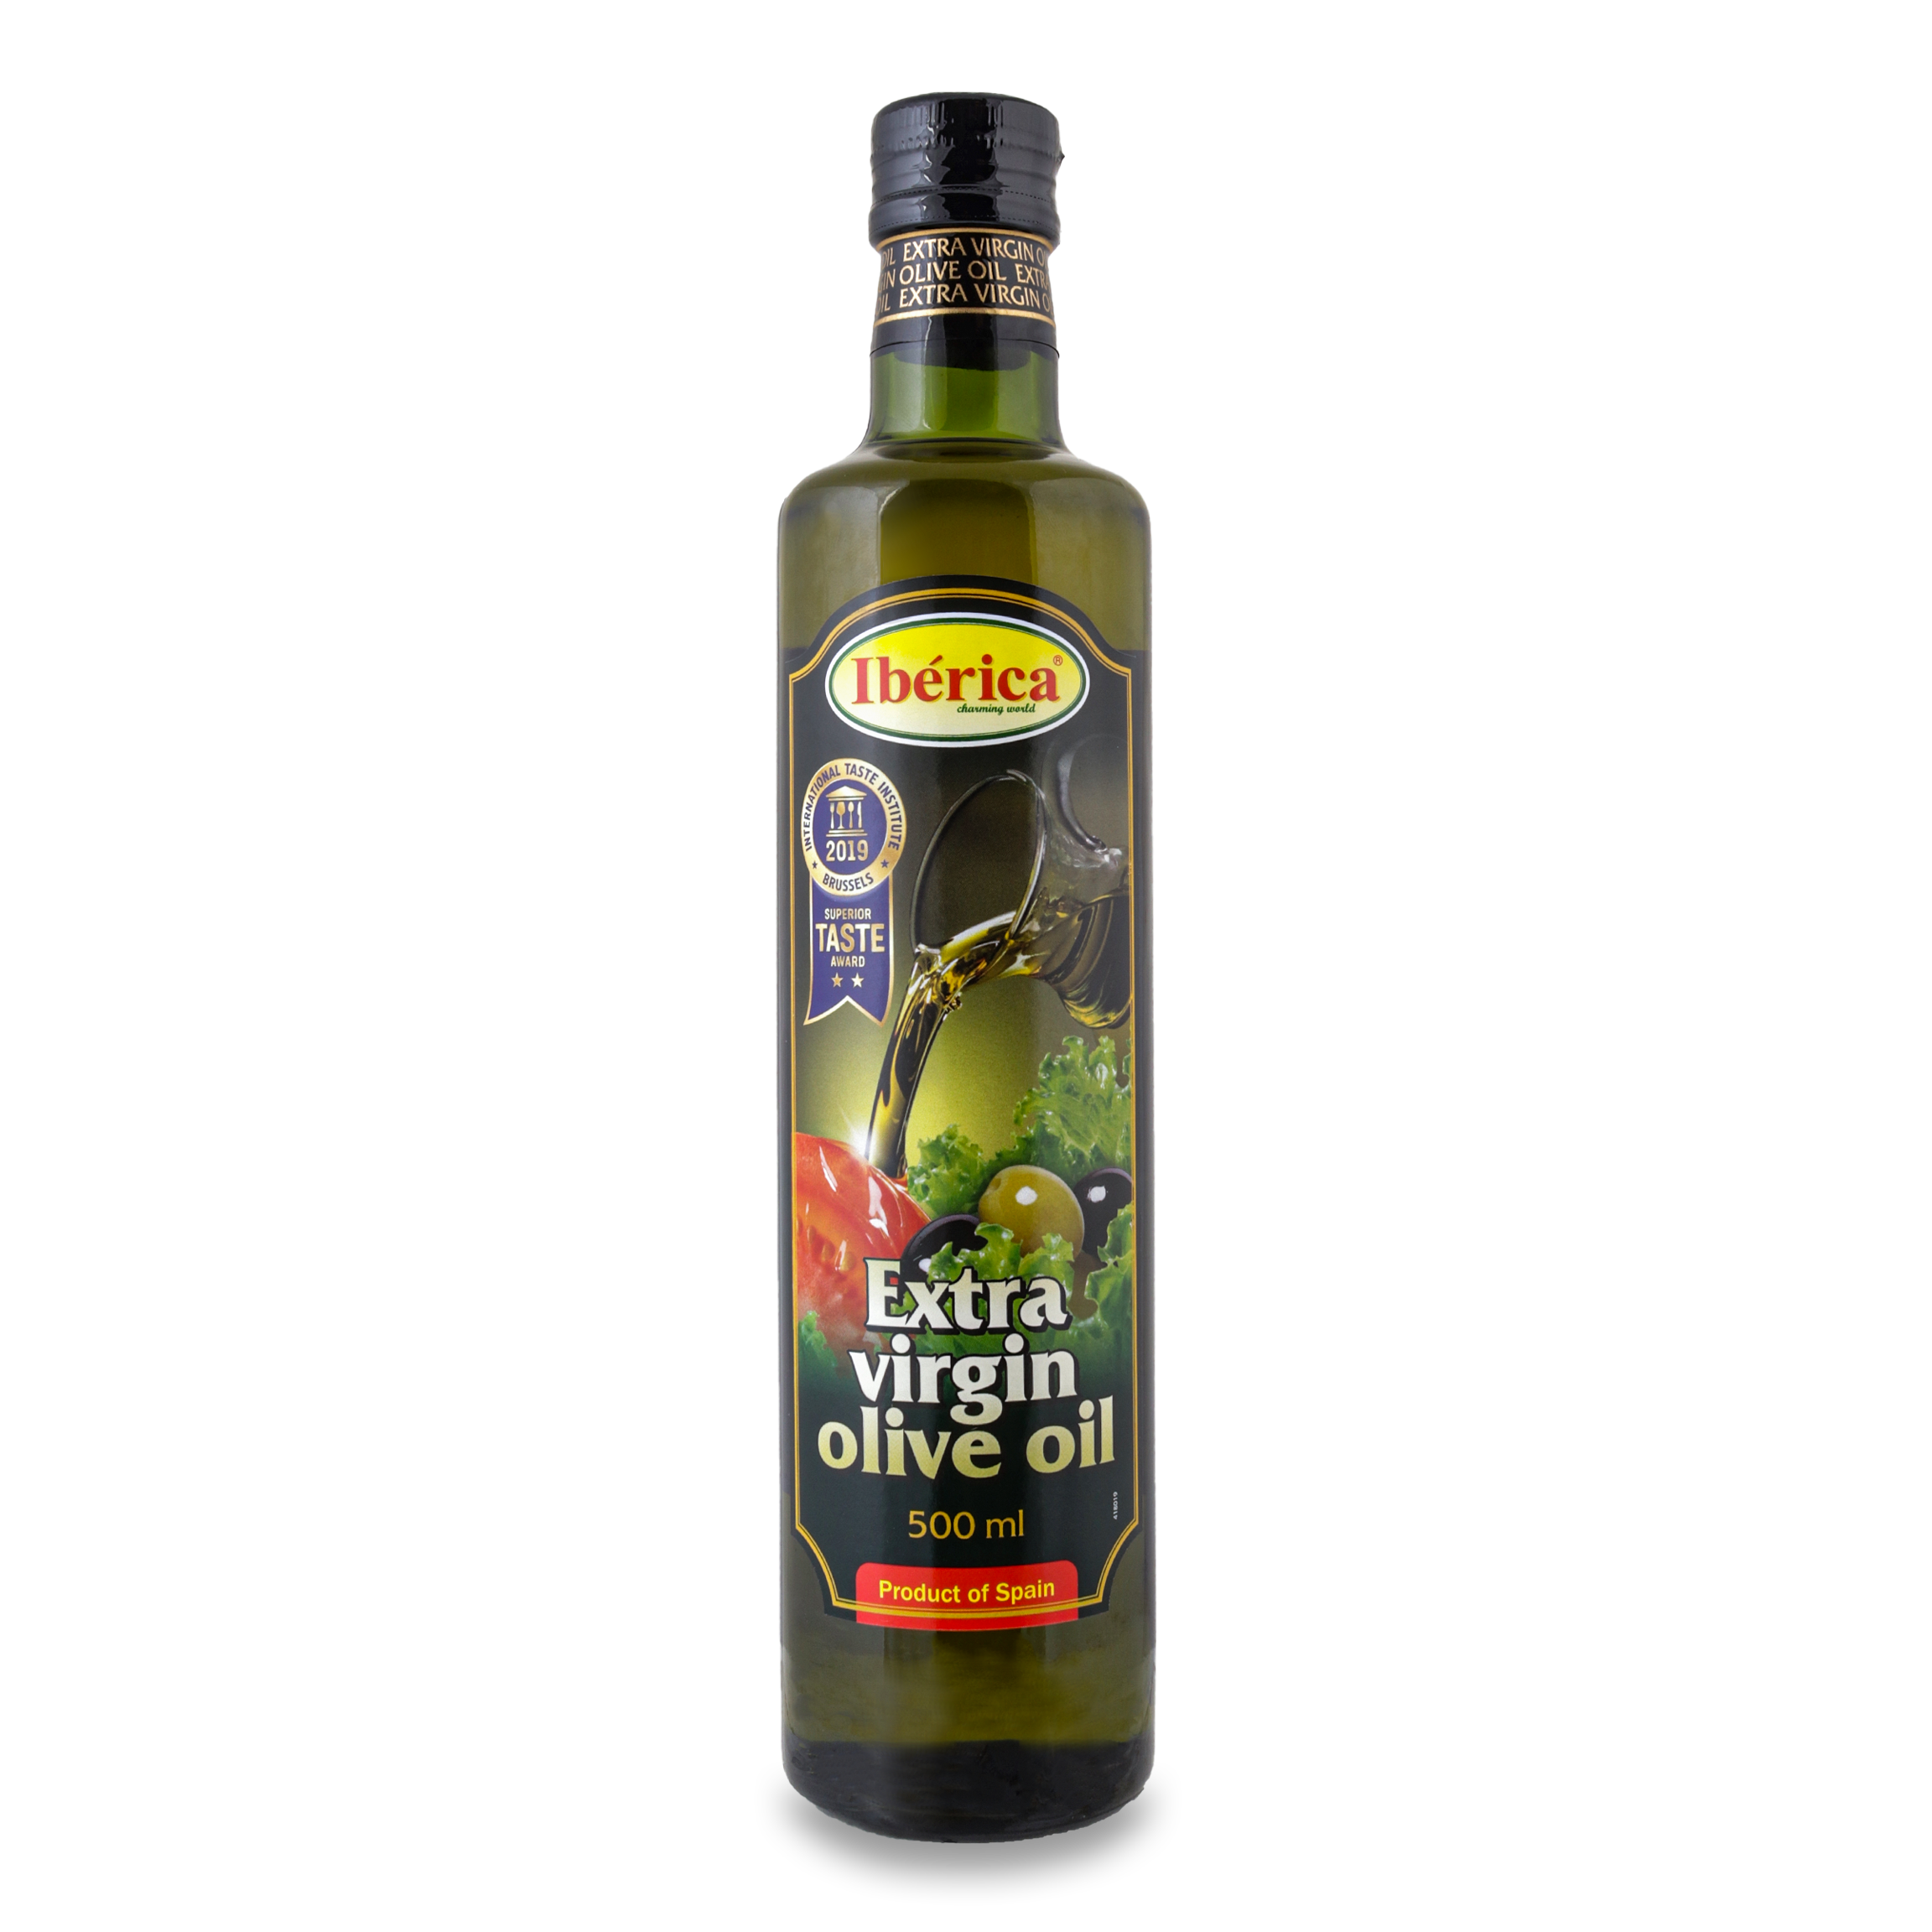 Iberica Extra Virgin Olive Oil 500ml